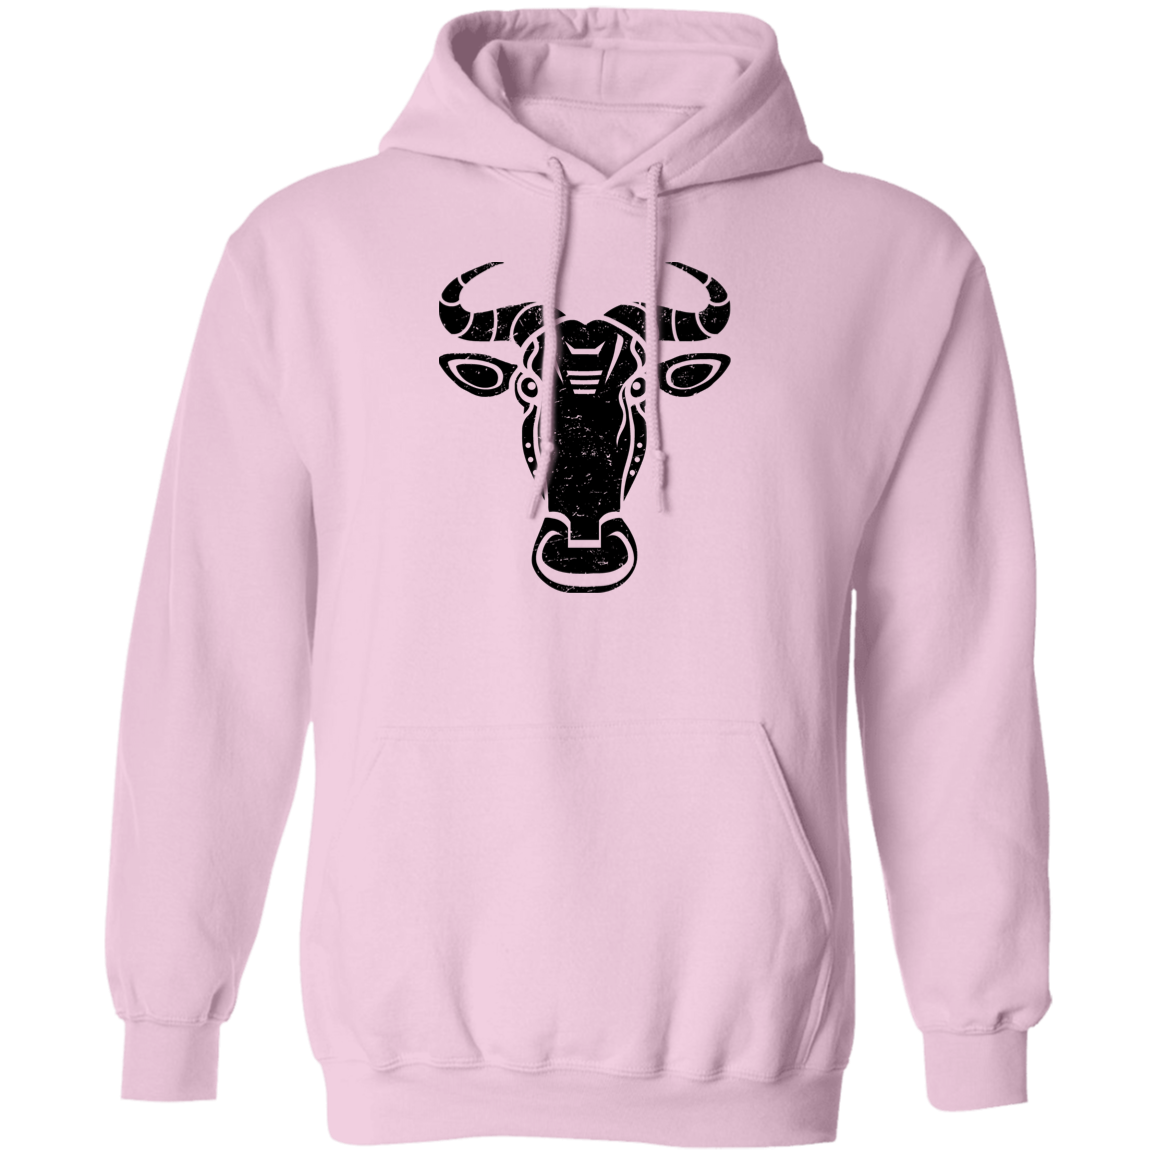 Black Distressed Emblem Hoodies for Adults (Wildebeest/Brute)